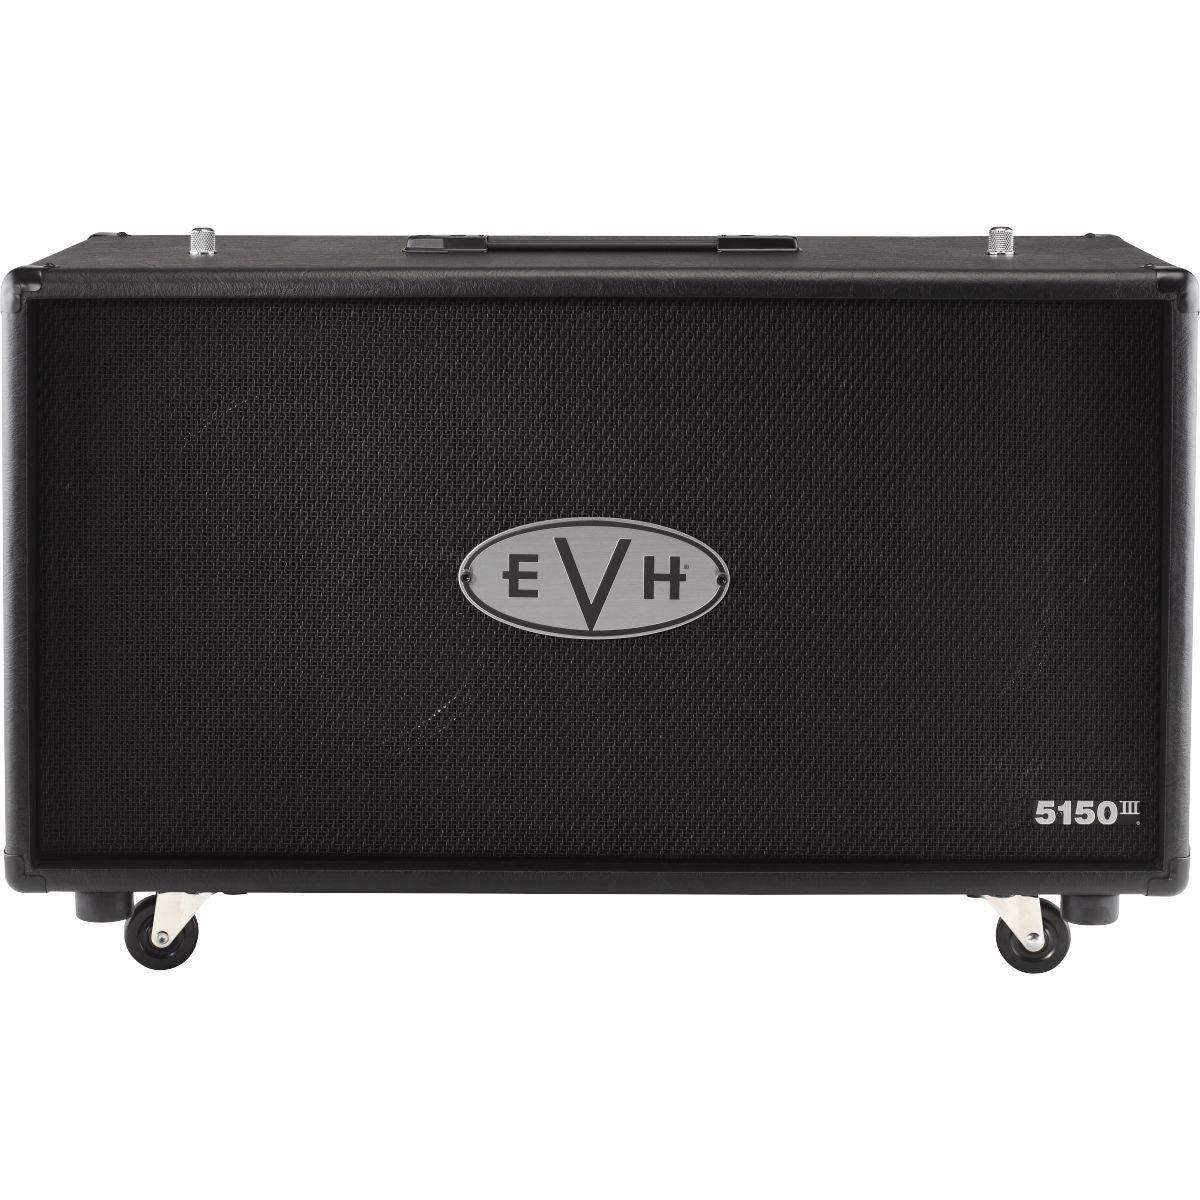 EVH 5150 III 2x12 Cabinet Black - 2253101010